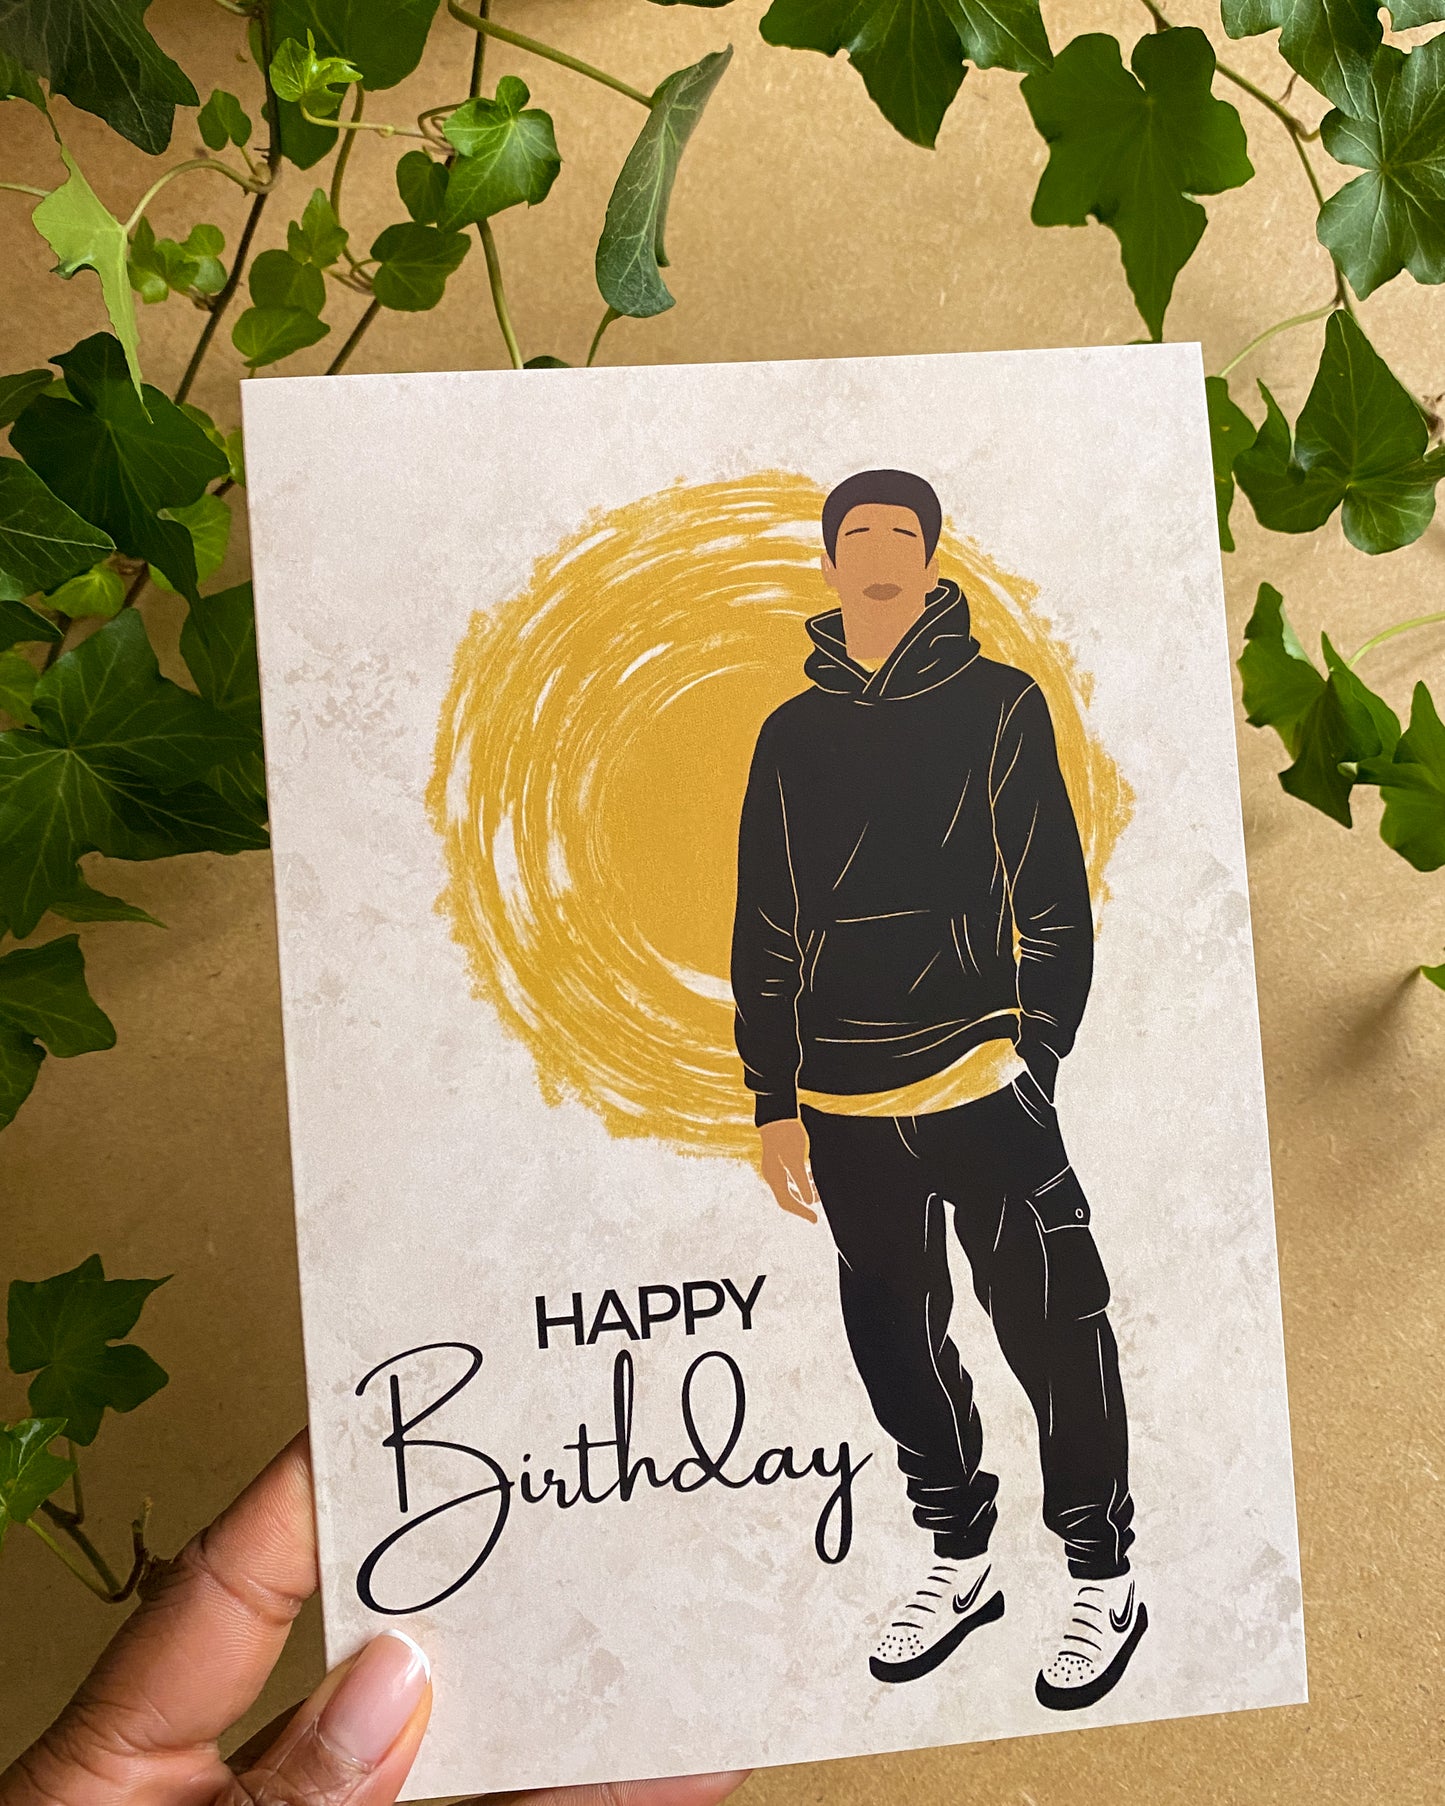 Blake’s Happy Birthday Birthday Black Boy / Man Card.